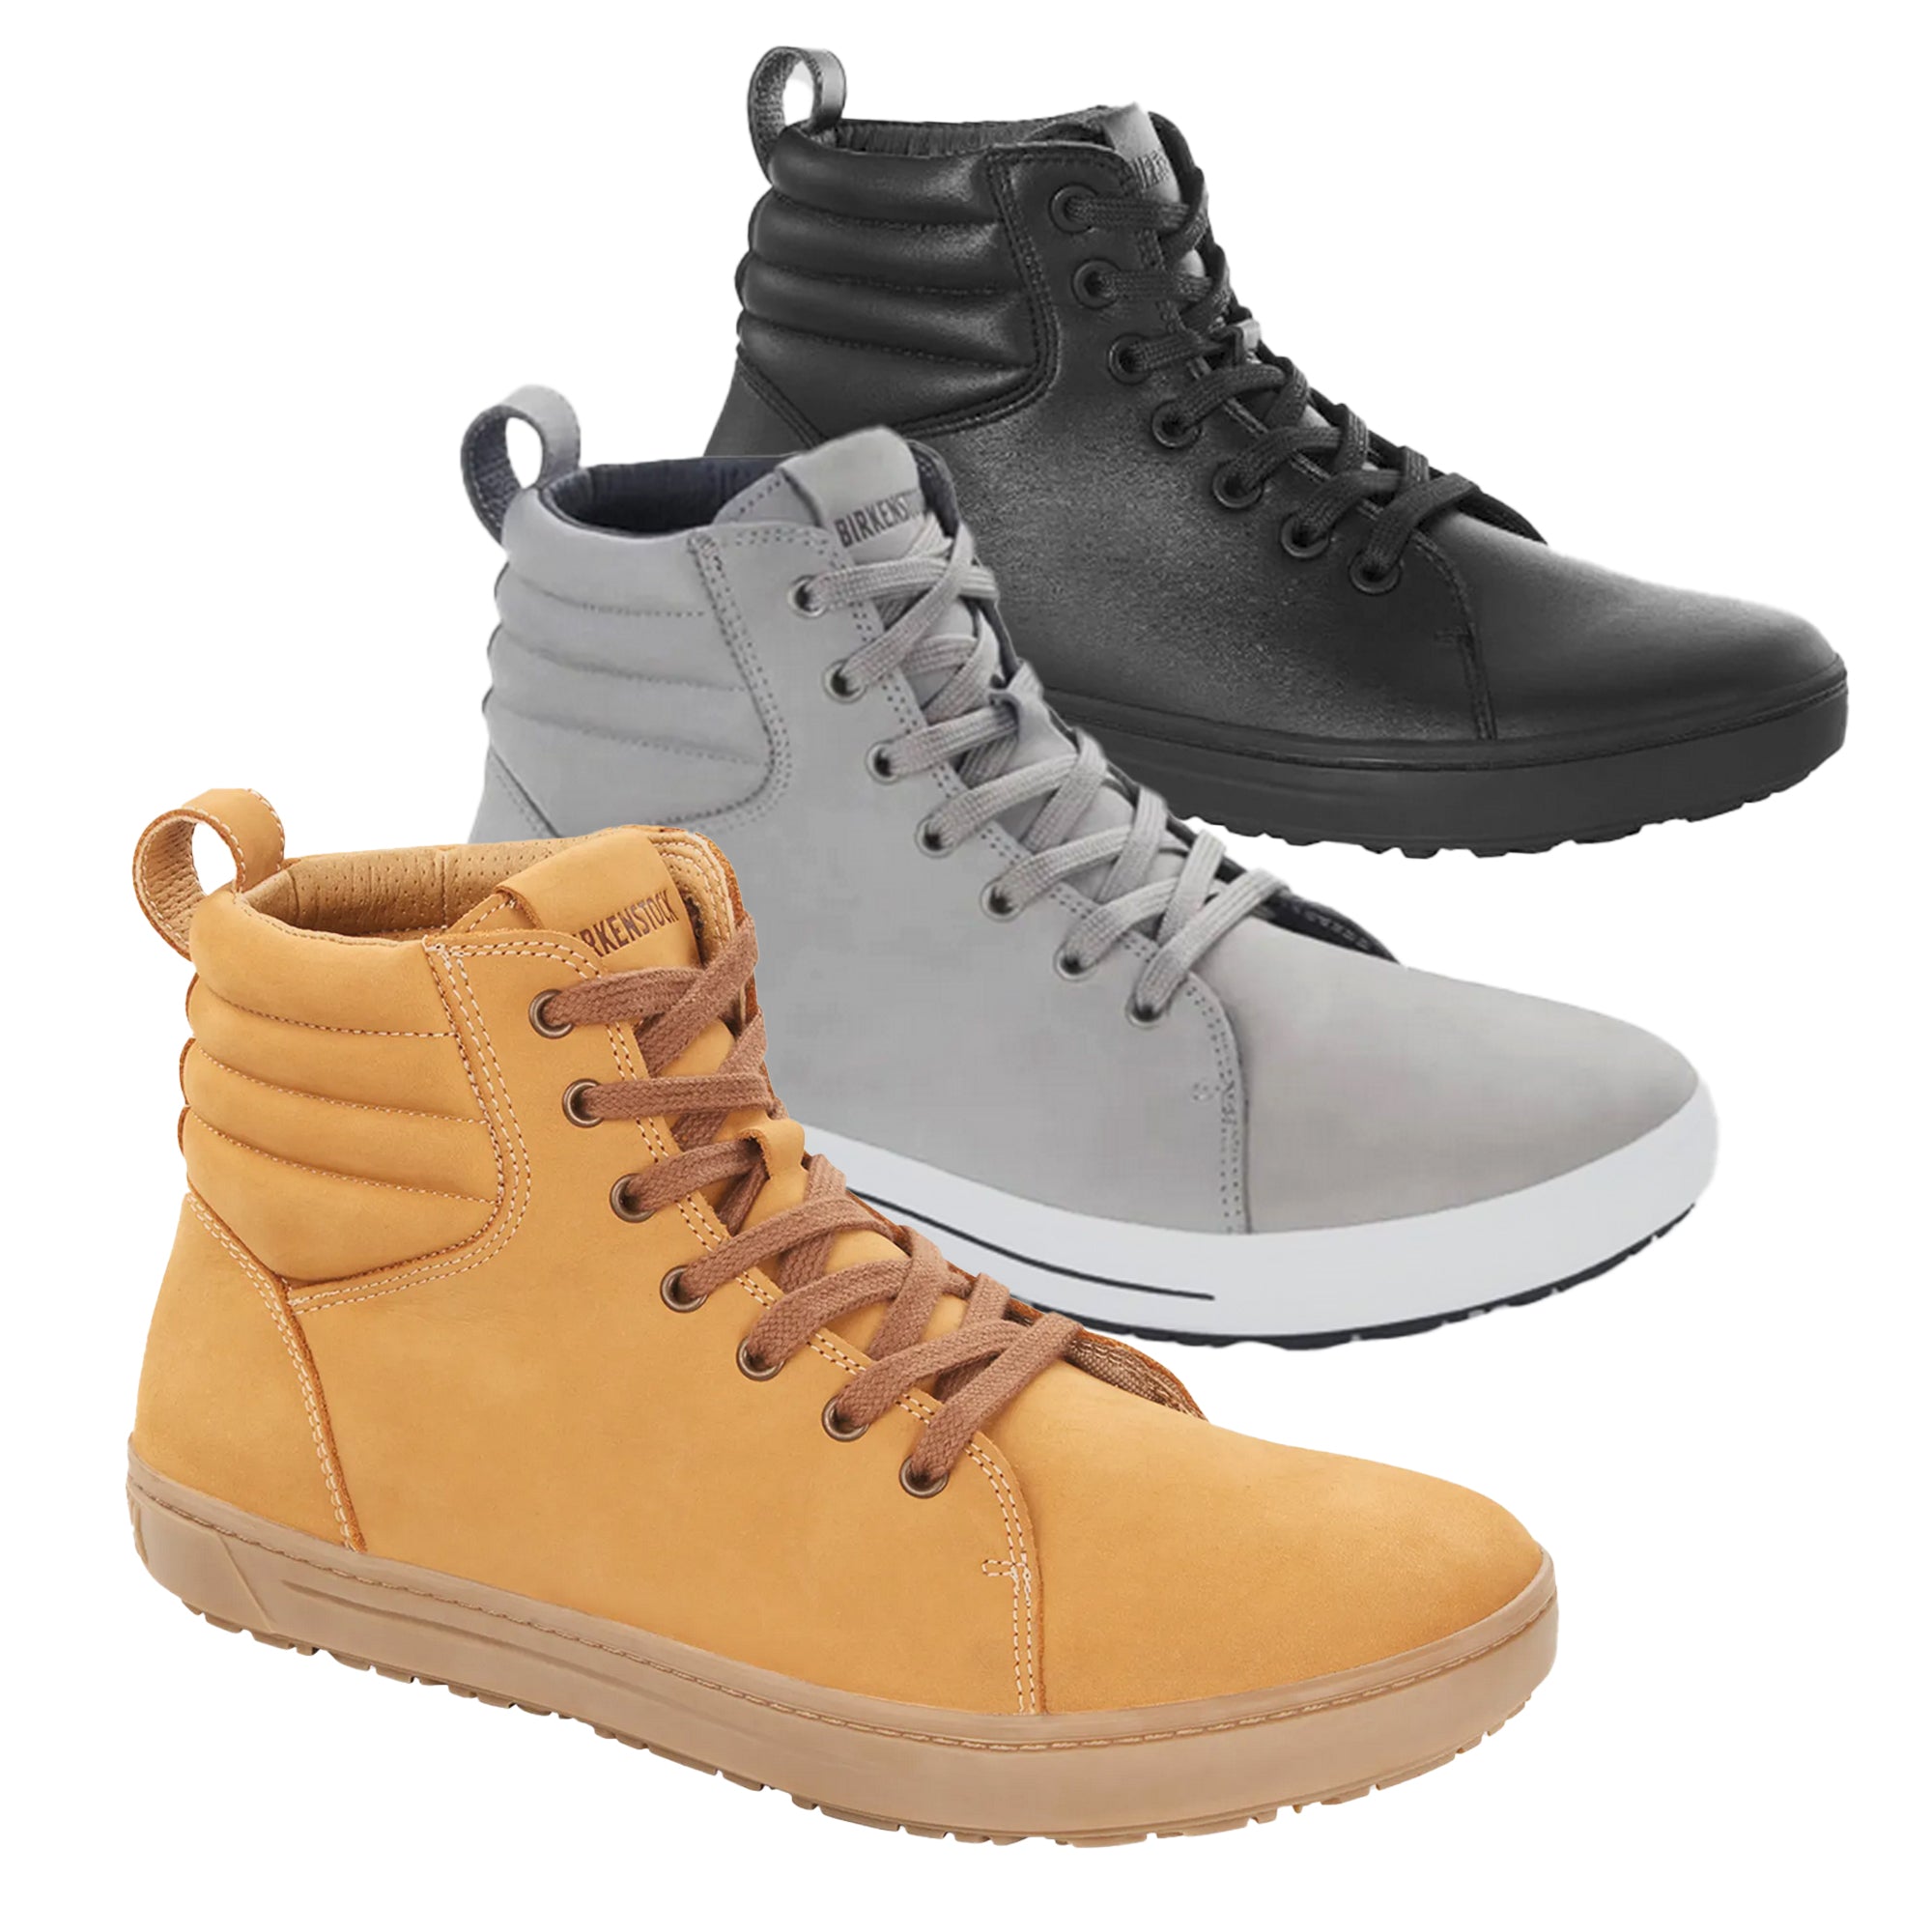 Birkenstock QO700 QO 700 Leather Boots Work Shoes Professional Sneakers NEW